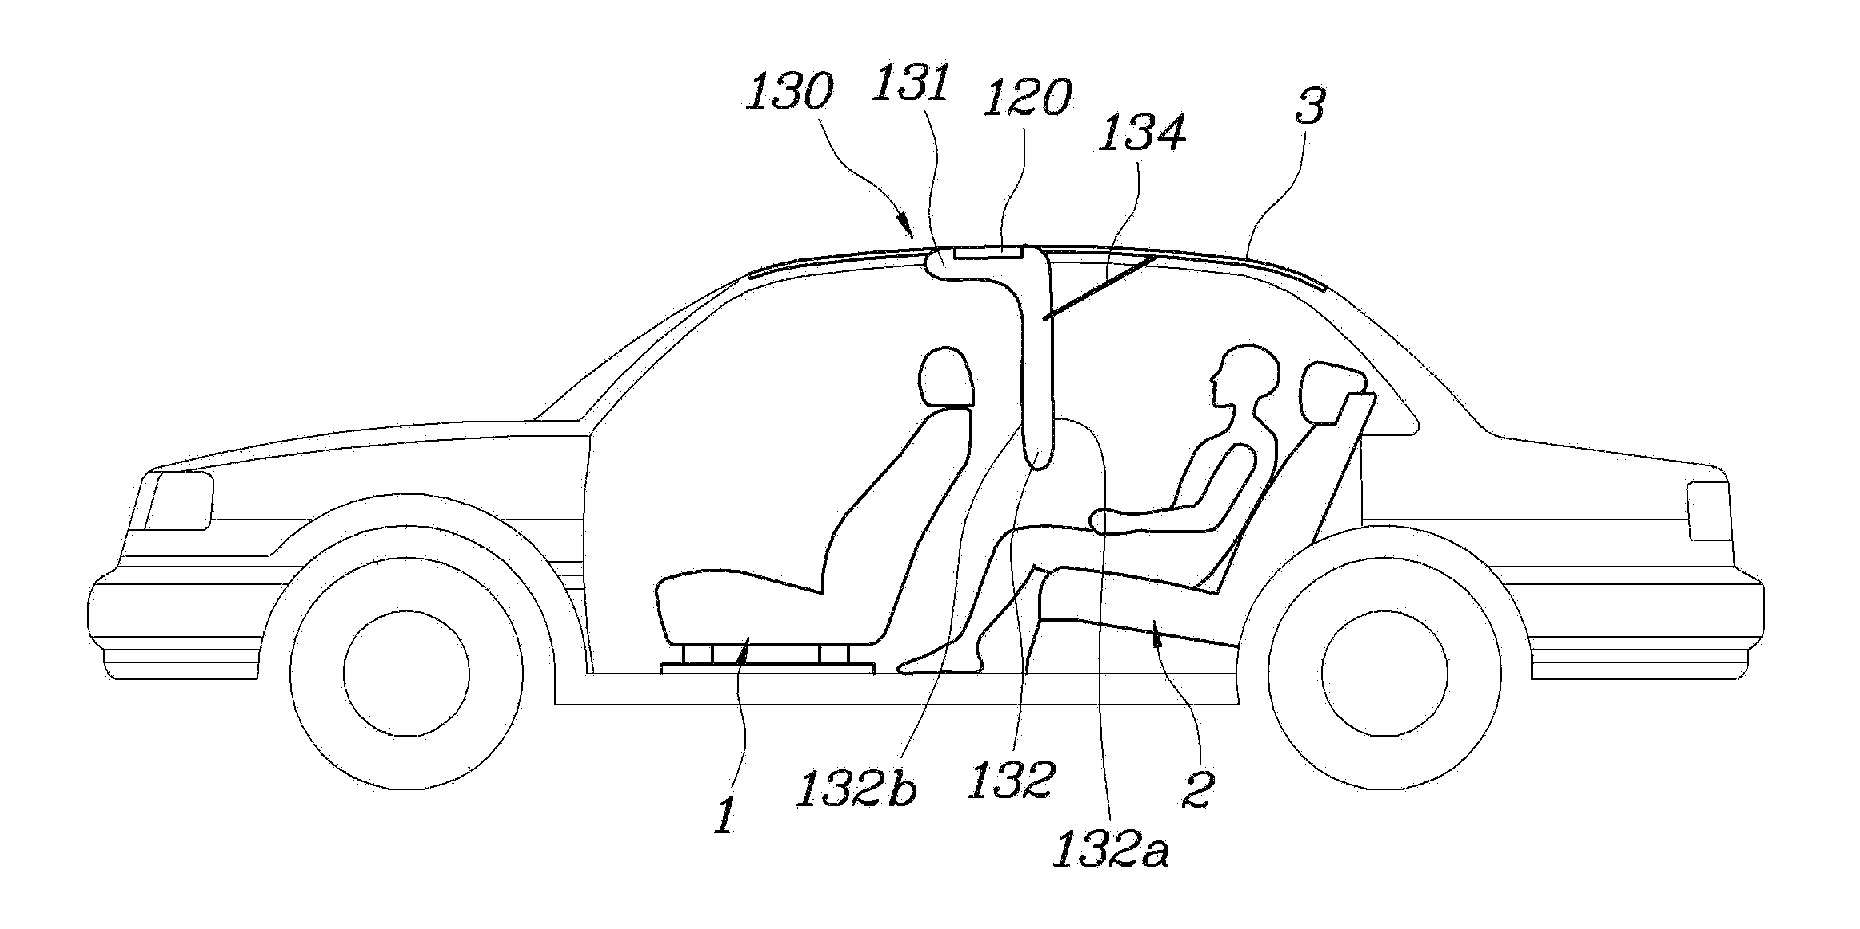 Internal airbag device